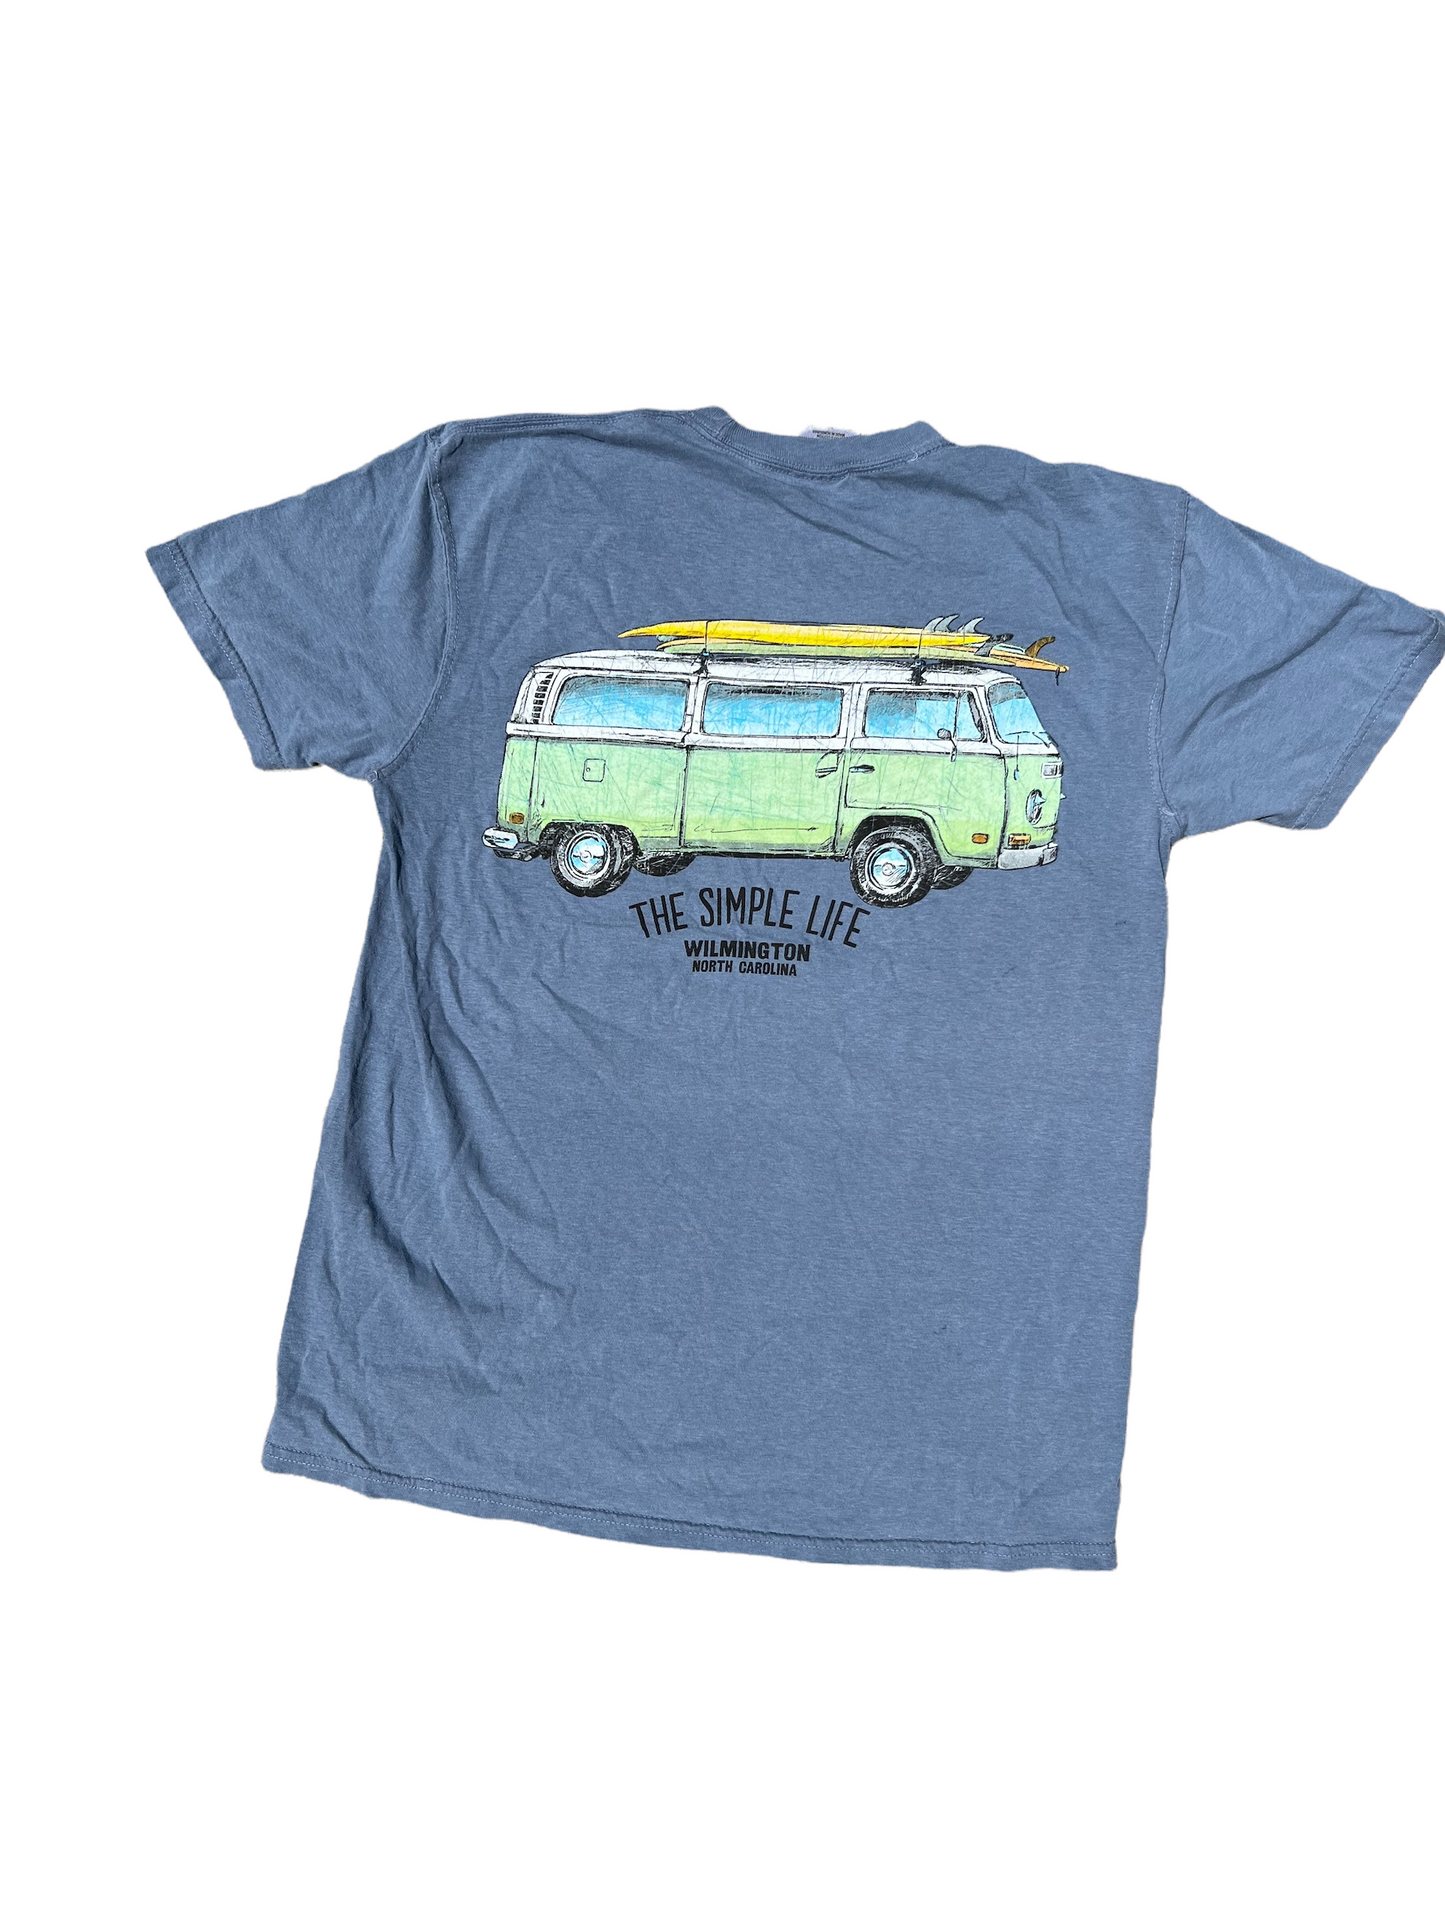 Simple Life Bus , Wilmington NC - T Shirt - Blue Jean